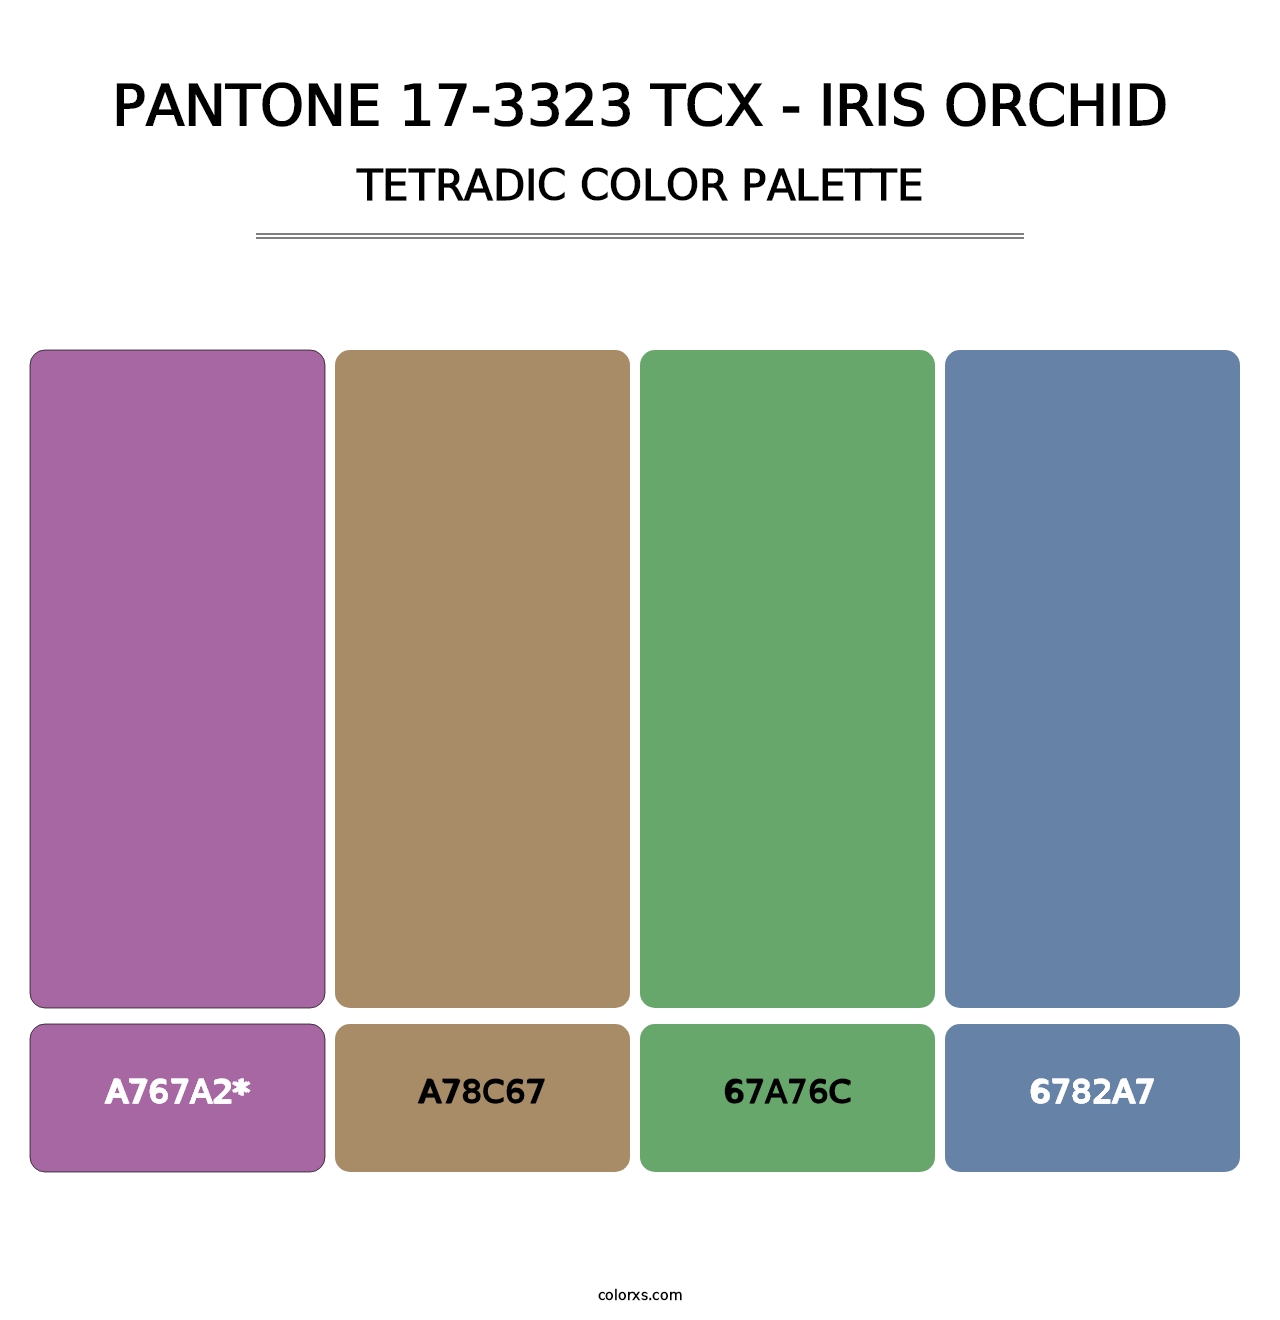 PANTONE 17-3323 TCX - Iris Orchid - Tetradic Color Palette